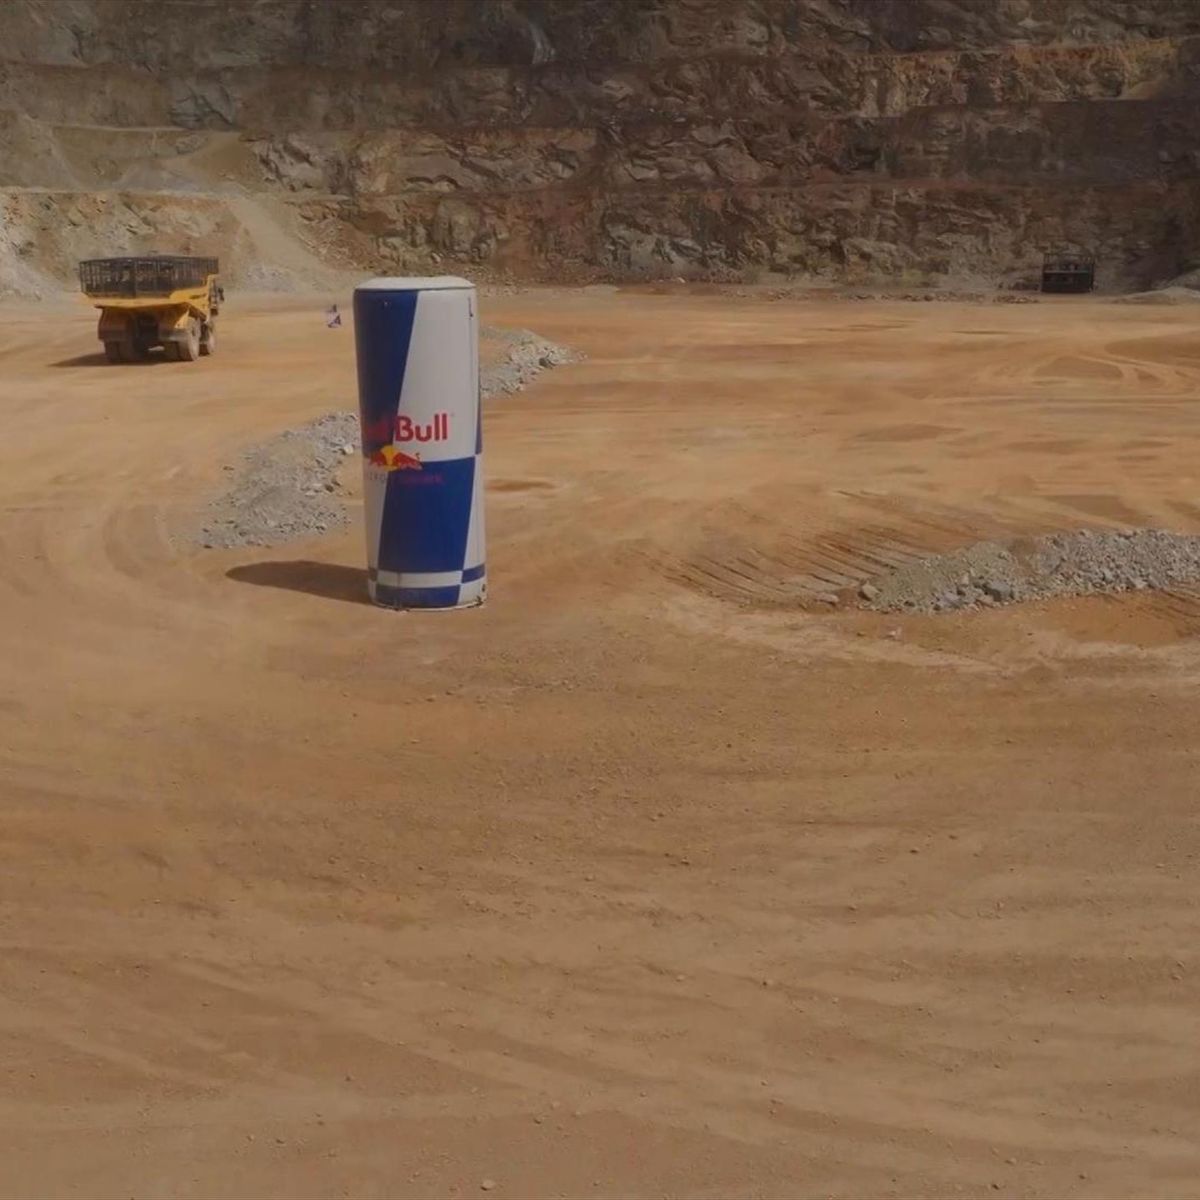 Watch Red Bull's F1 Drivers Wheel Monster Trucks On Dirt